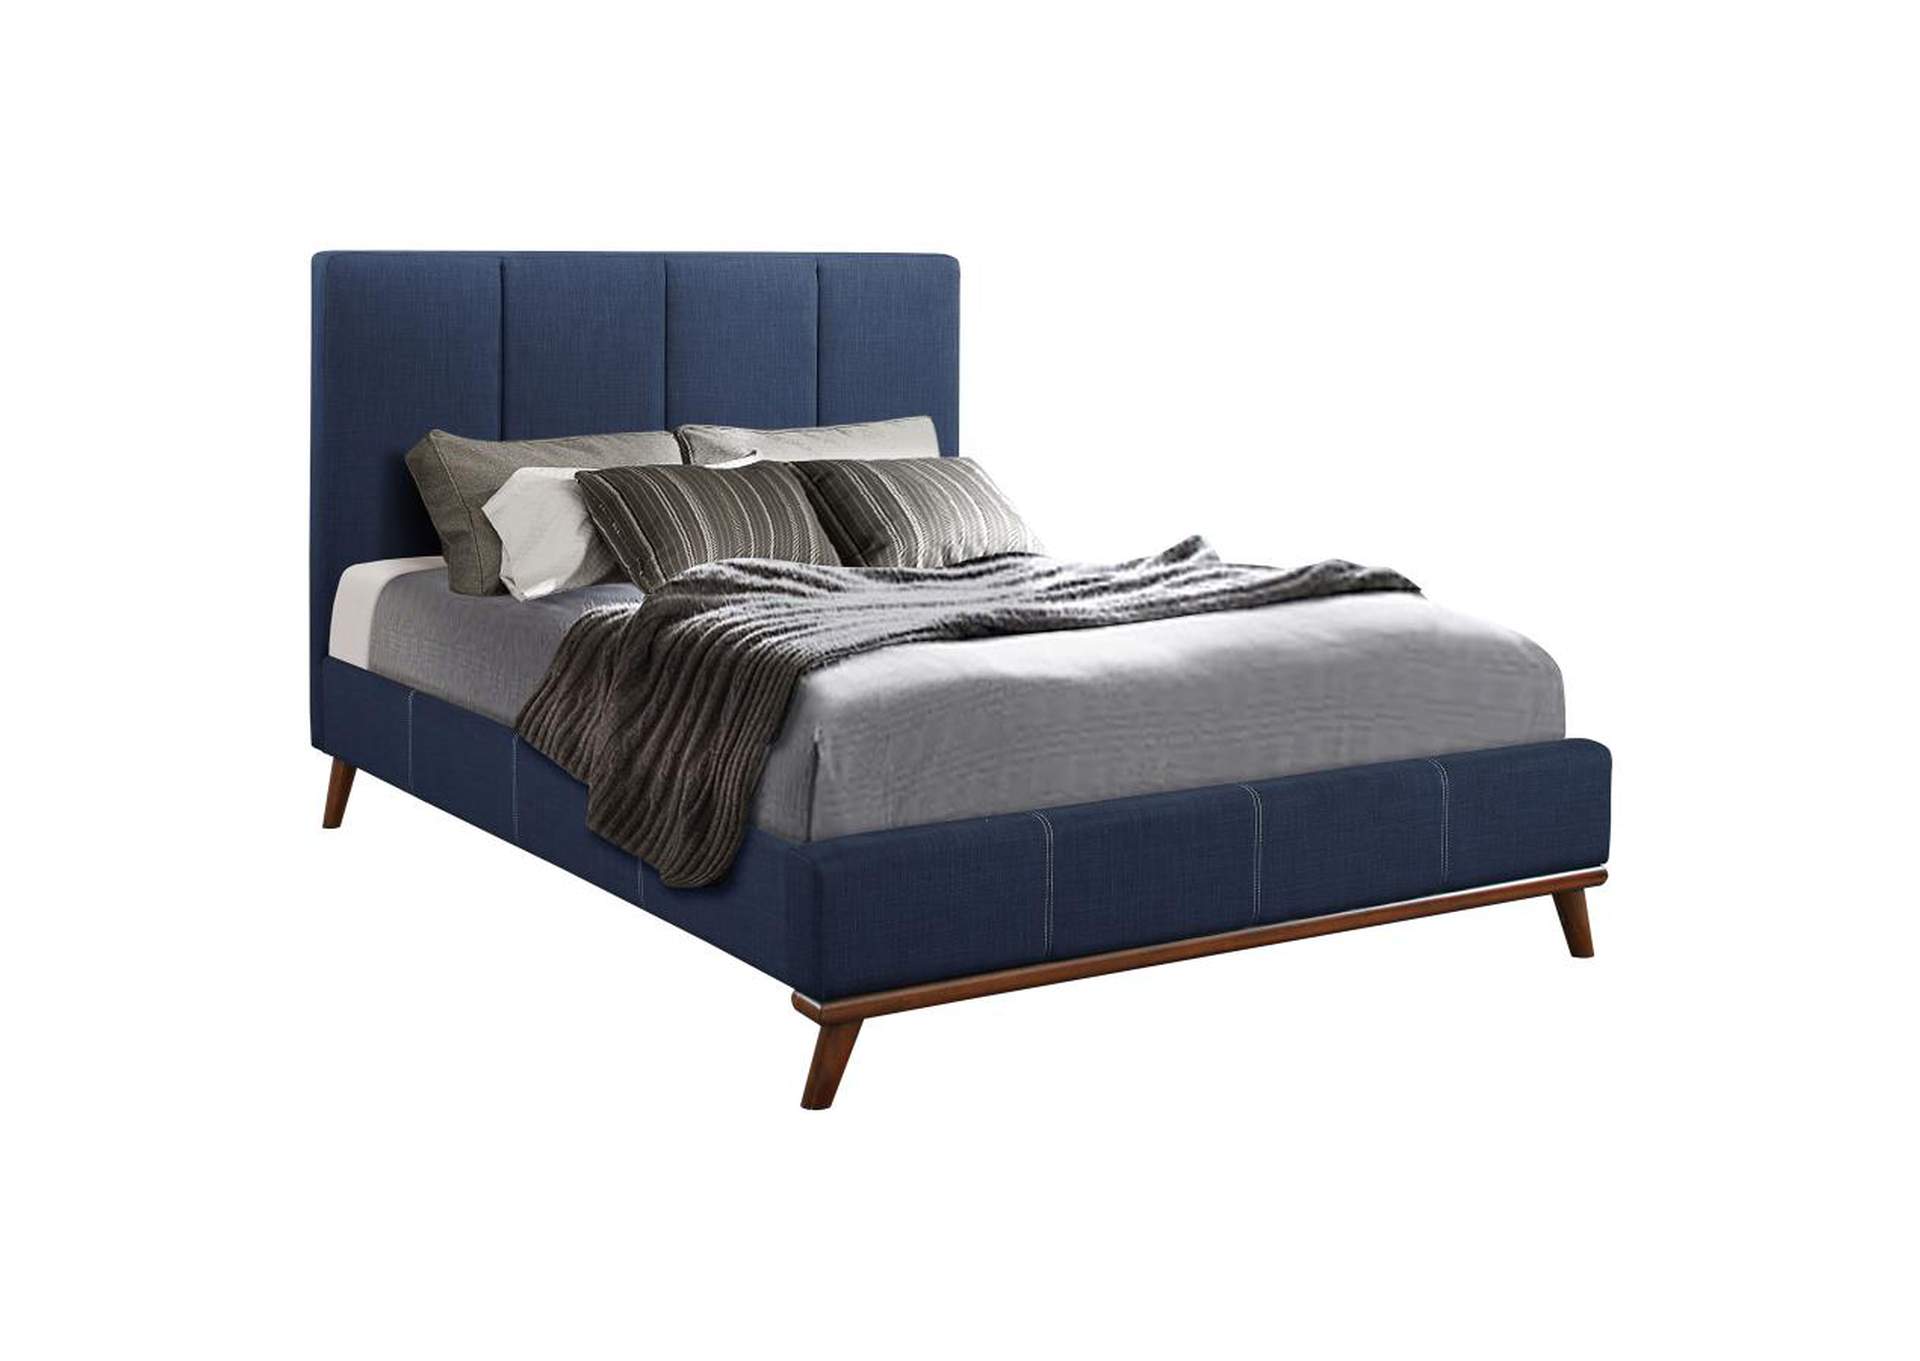 Beds - Coaster Fine Furniture